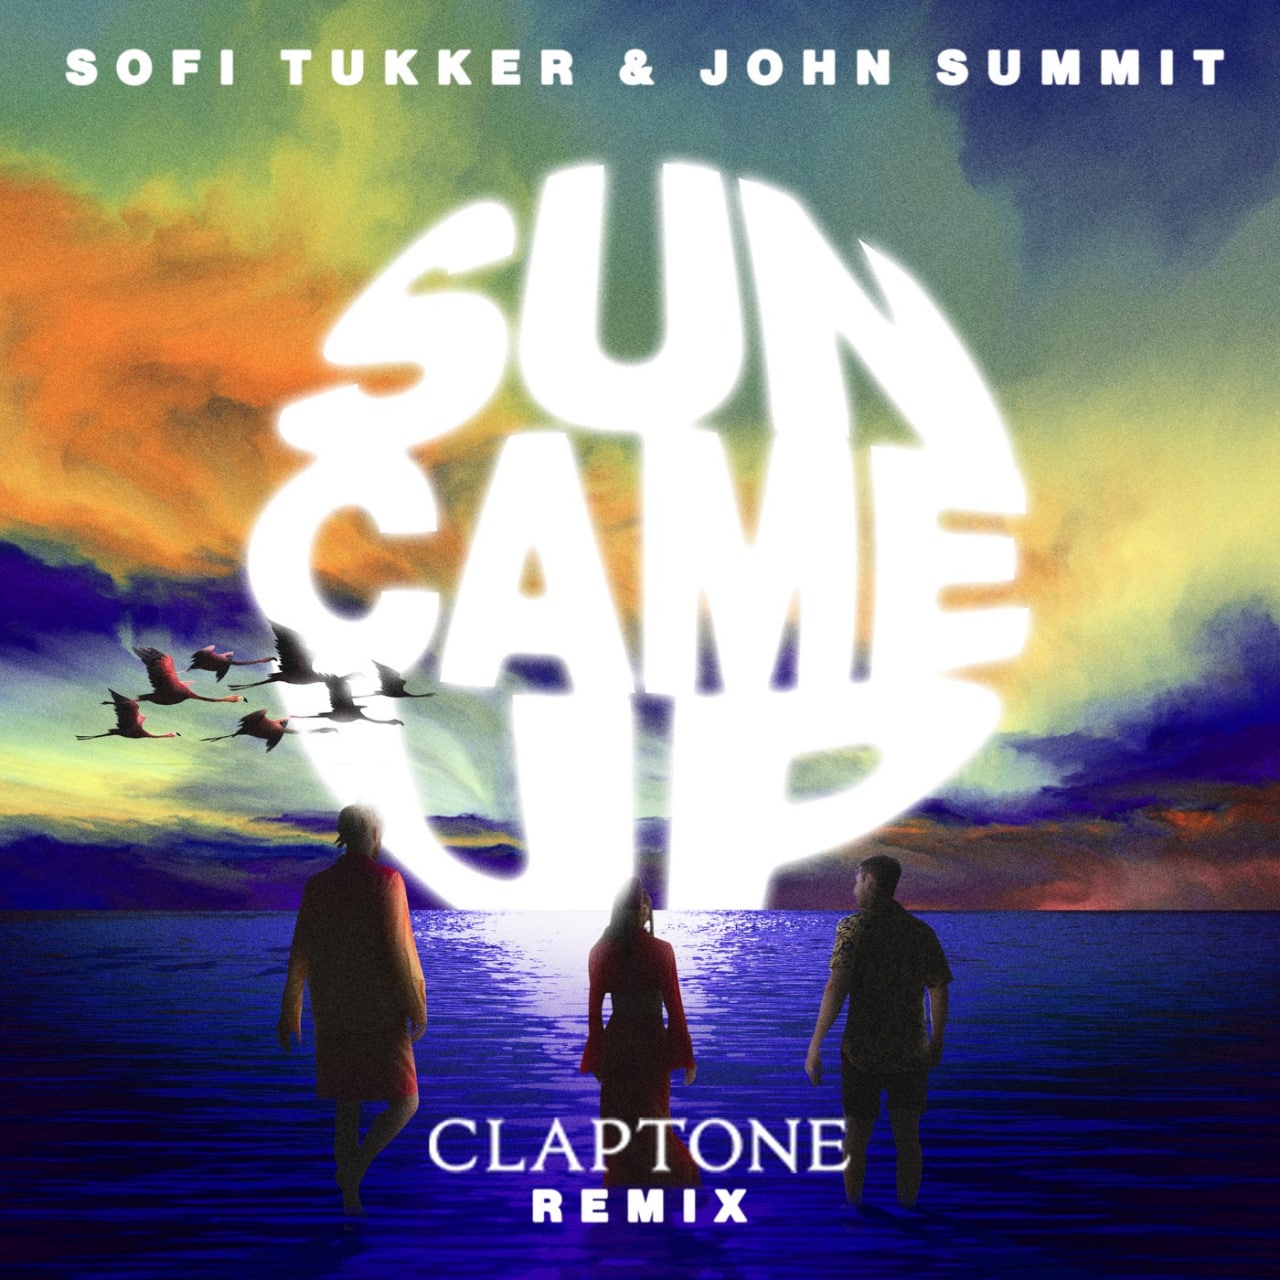 Sofi Tukker x John Summit - Sun Came Up (Claptone Extended Remix)